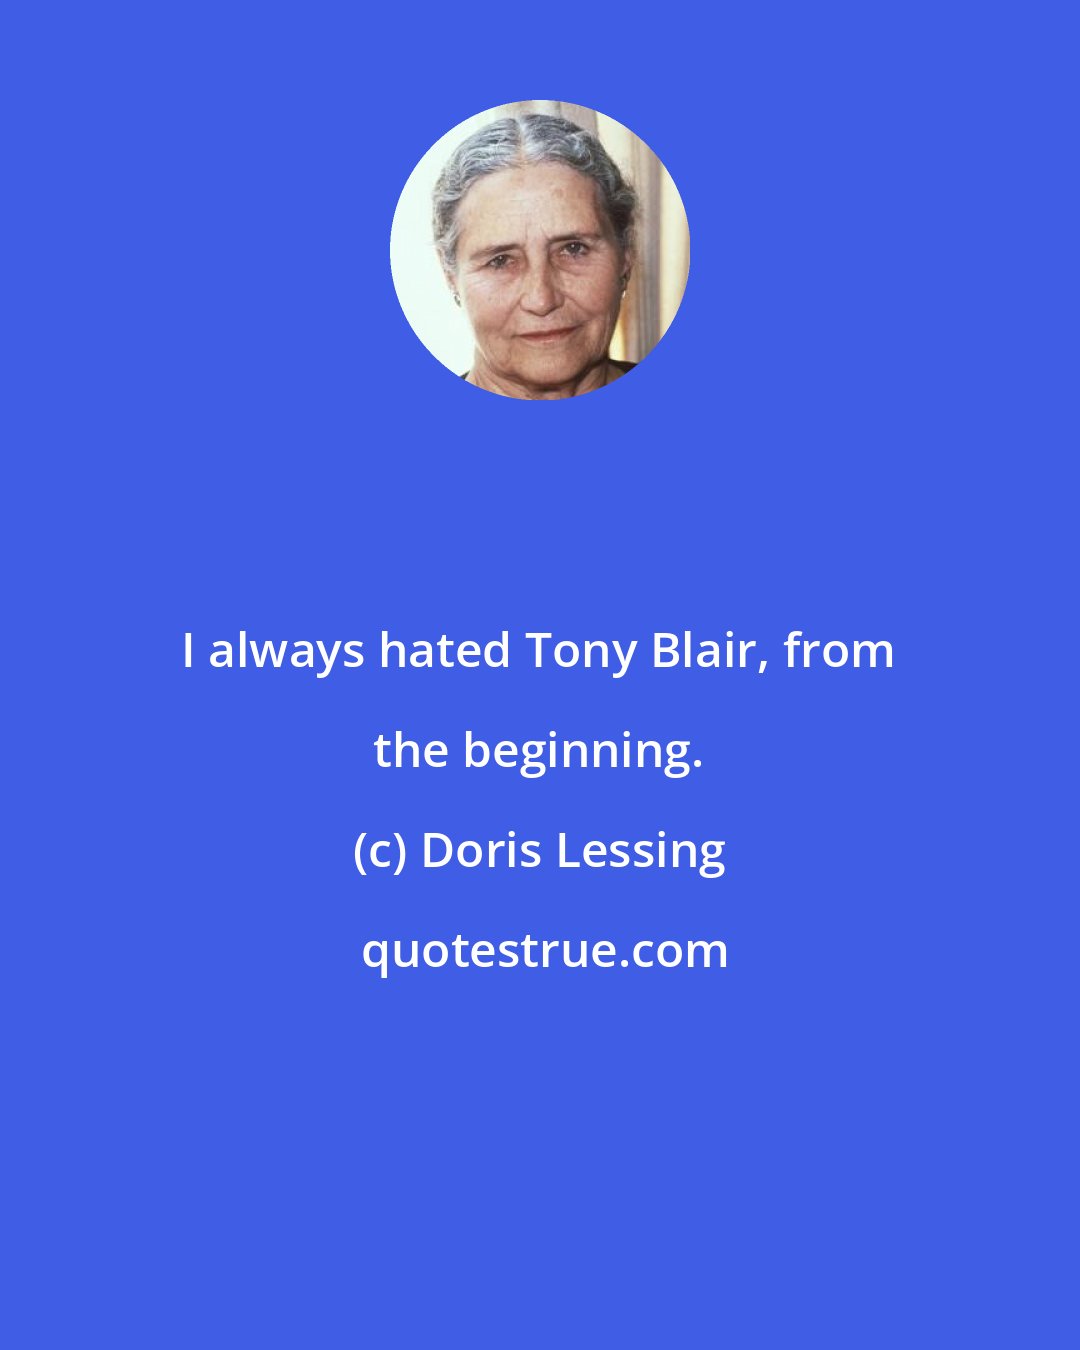 Doris Lessing: I always hated Tony Blair, from the beginning.